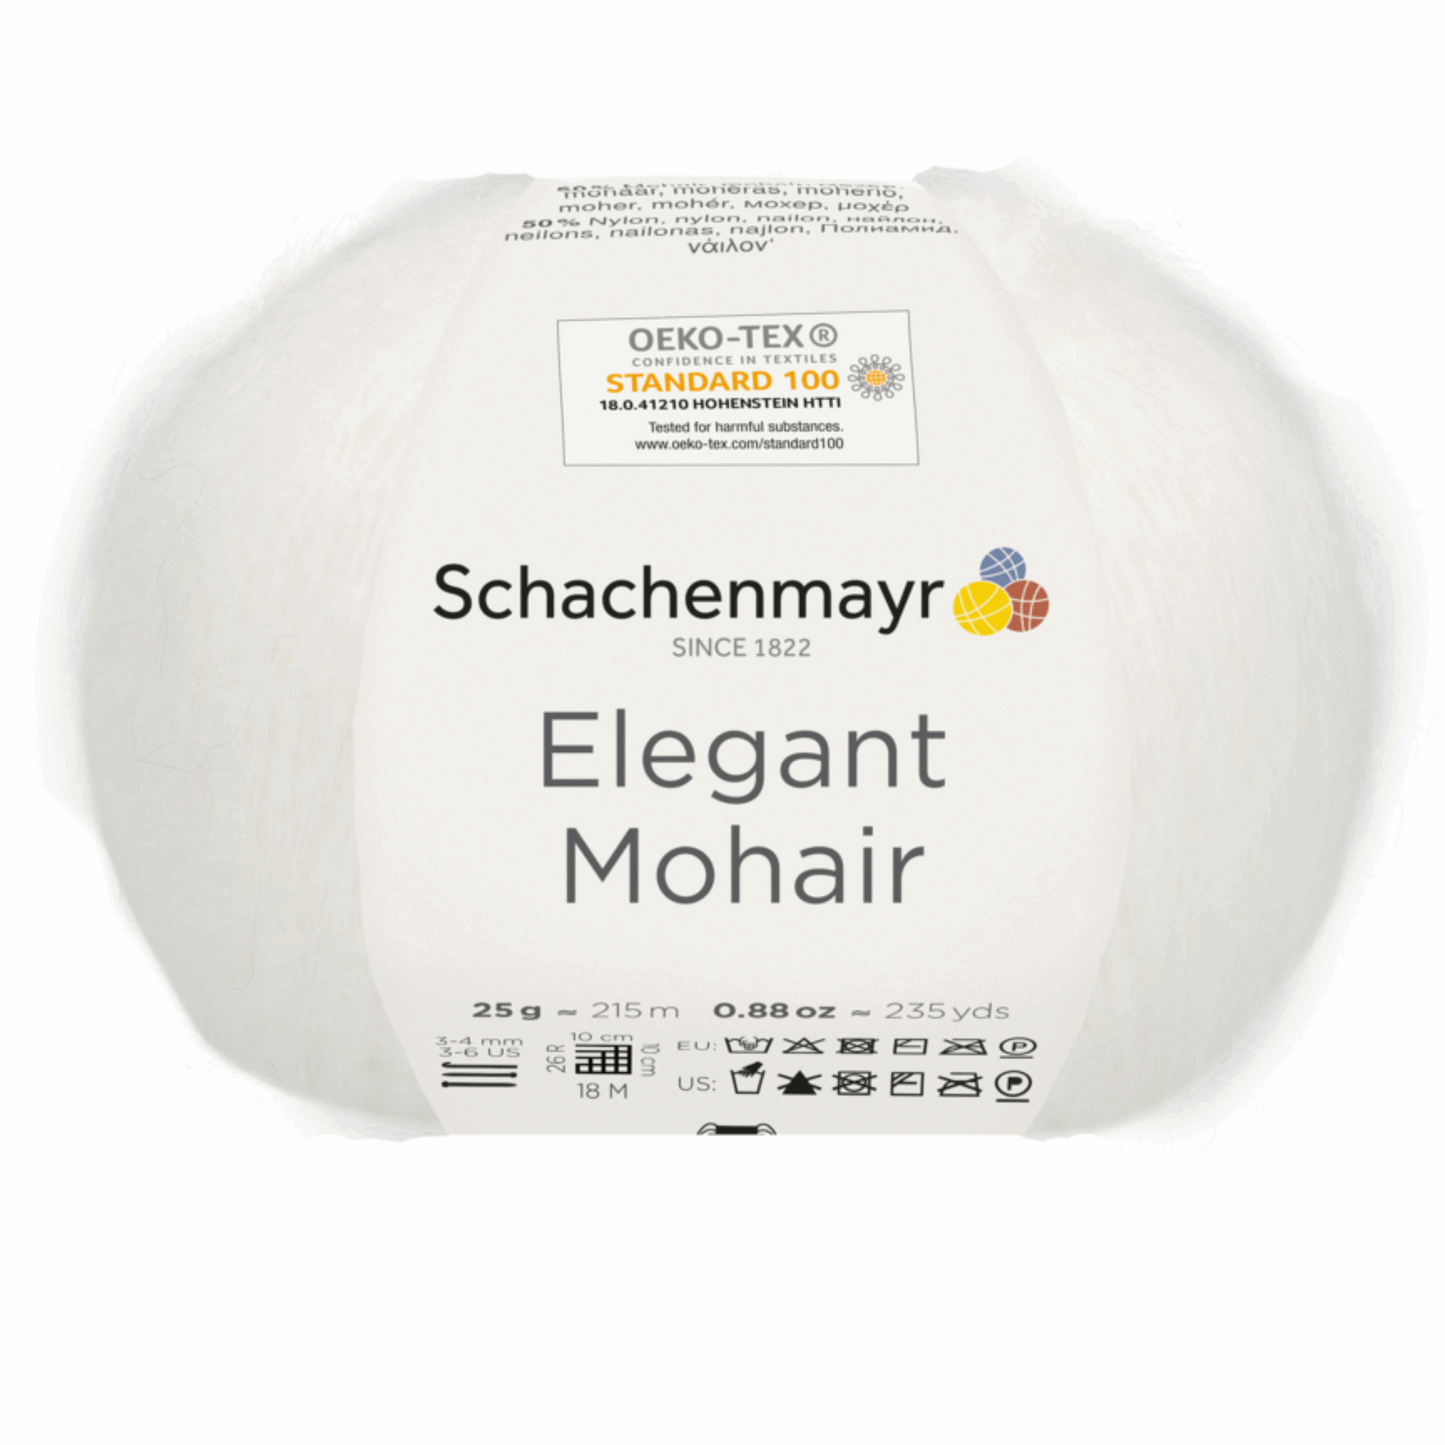 Schachenmayr Elegant Mohair 25g, 97003, color white 1